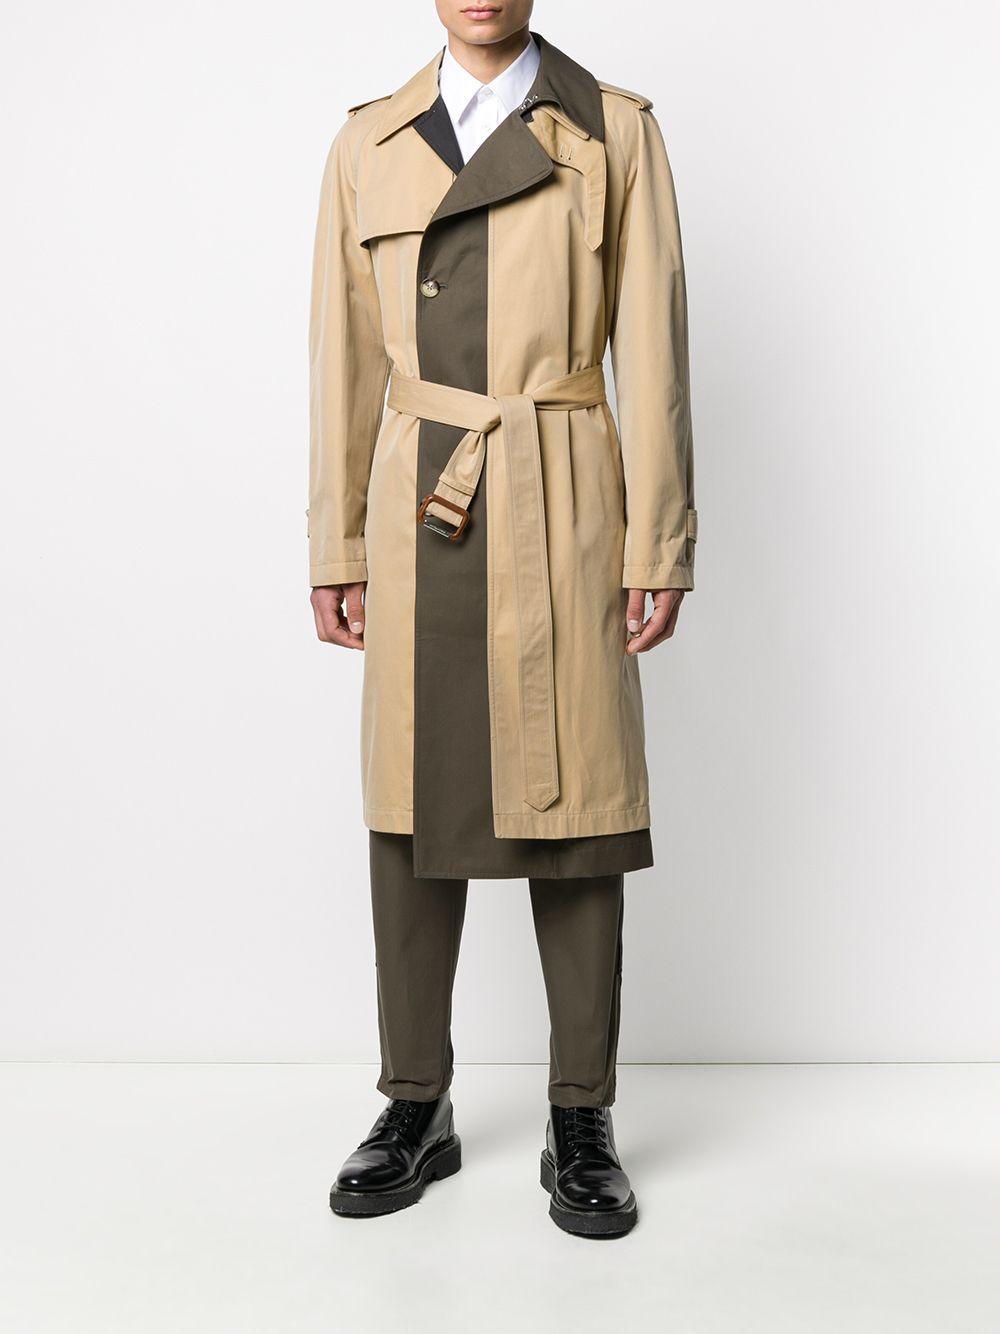 Alexander McQueen Panelled Trench Coat in Natural for Men - Lyst